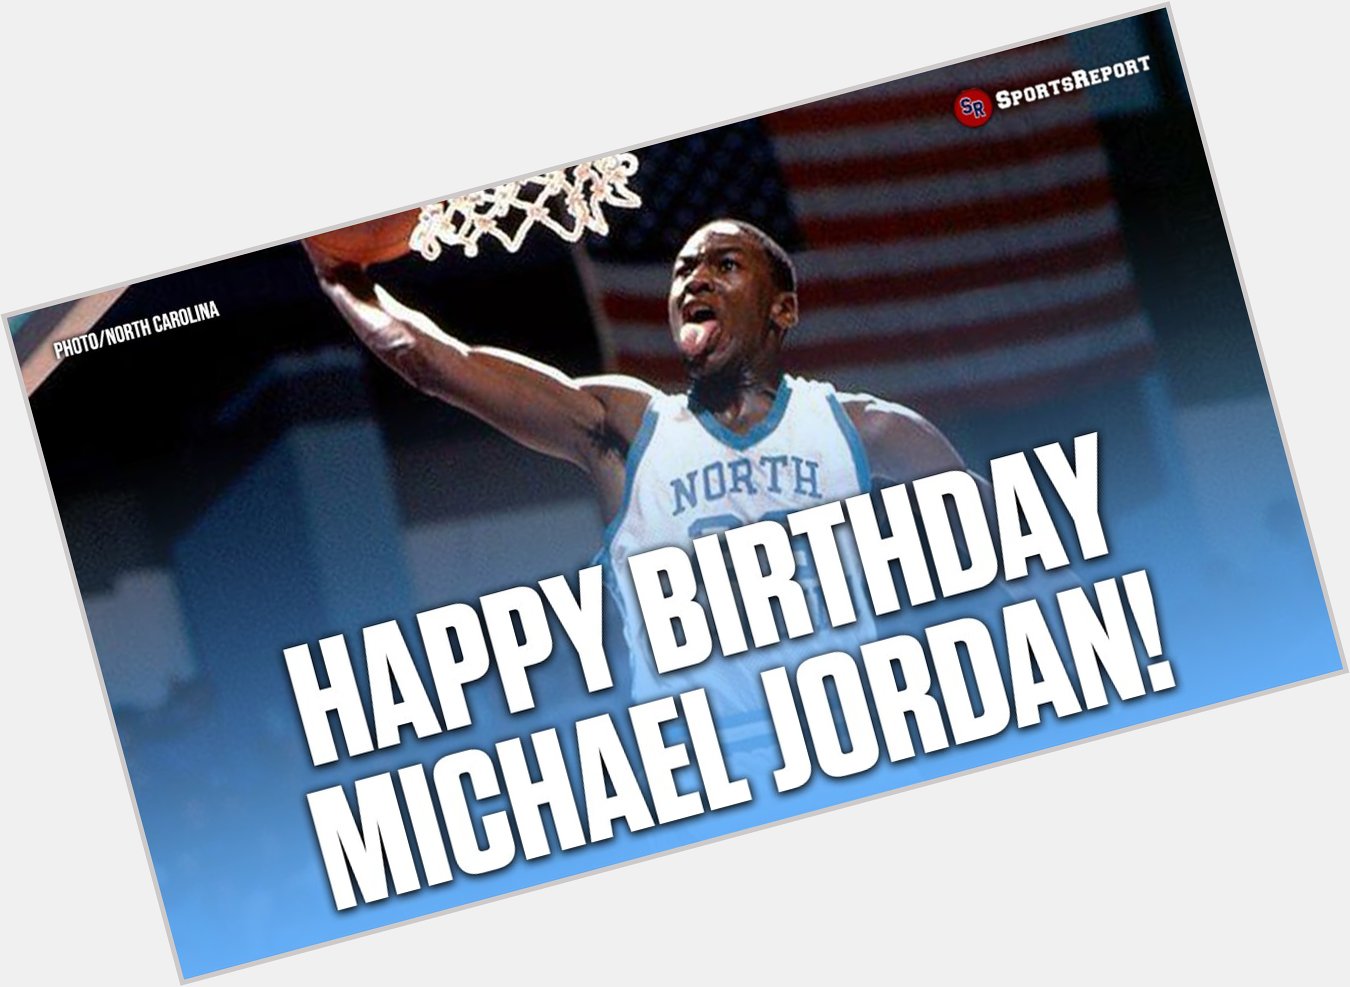  Fans, let\s wish LEGEND Michael Jordan a Happy Birthday! 